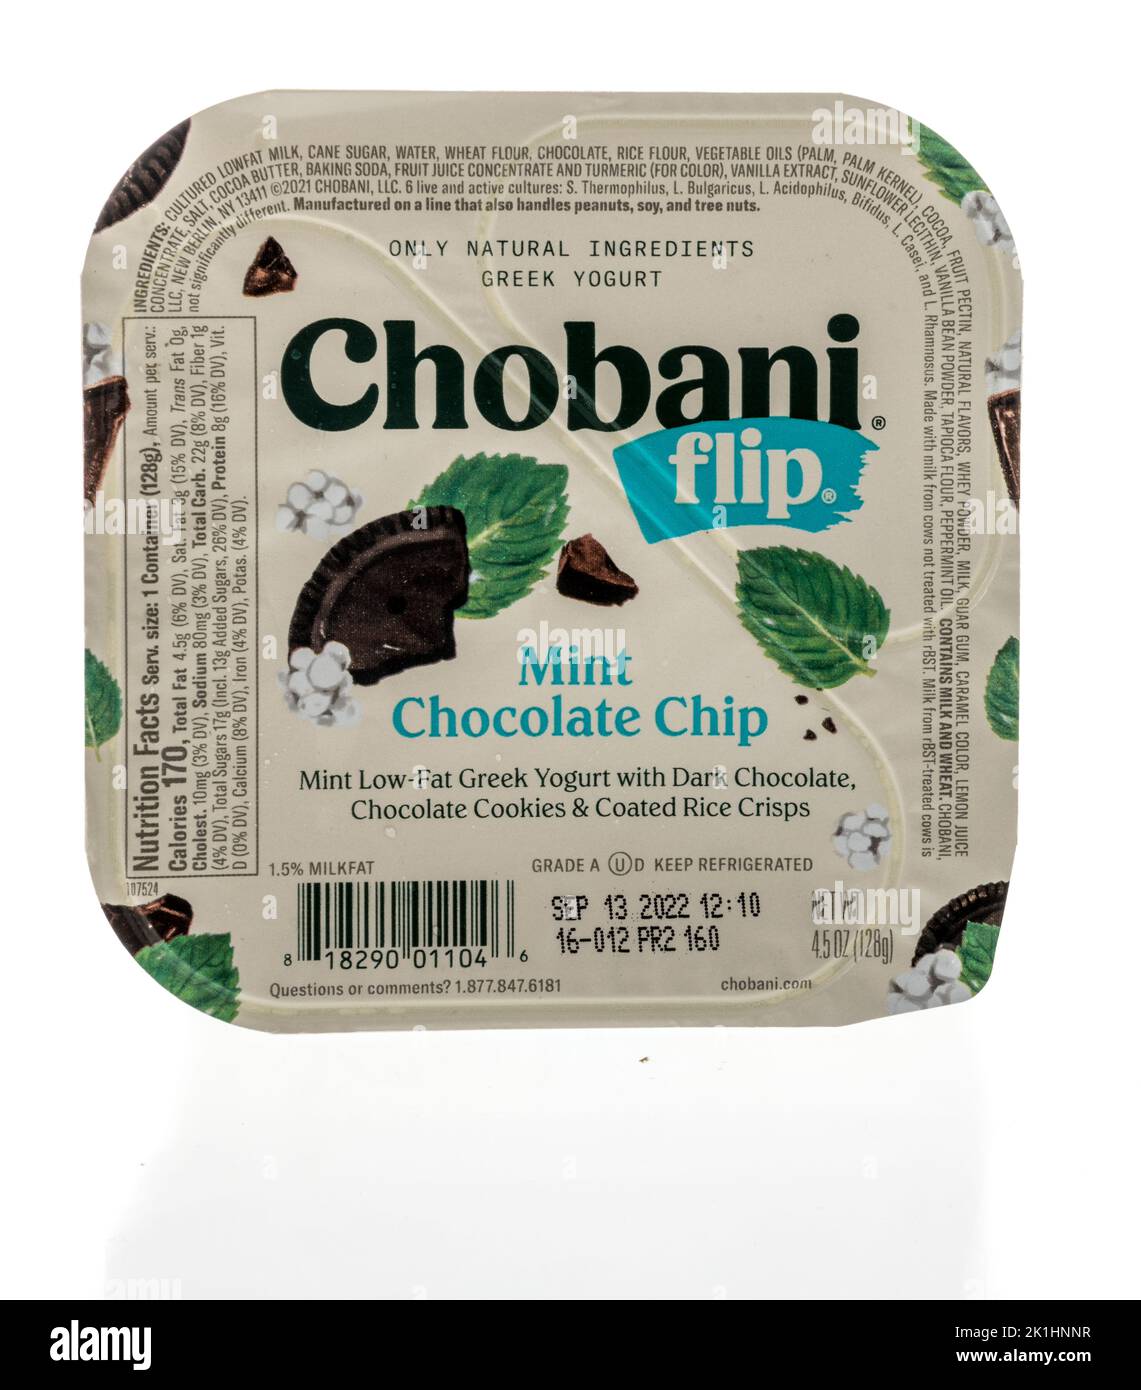 Winneconne, WI - 18 de septiembre de 2022: Un paquete de Chobani flip mint chocolate chip griego yogur sobre un fondo aislado. Foto de stock